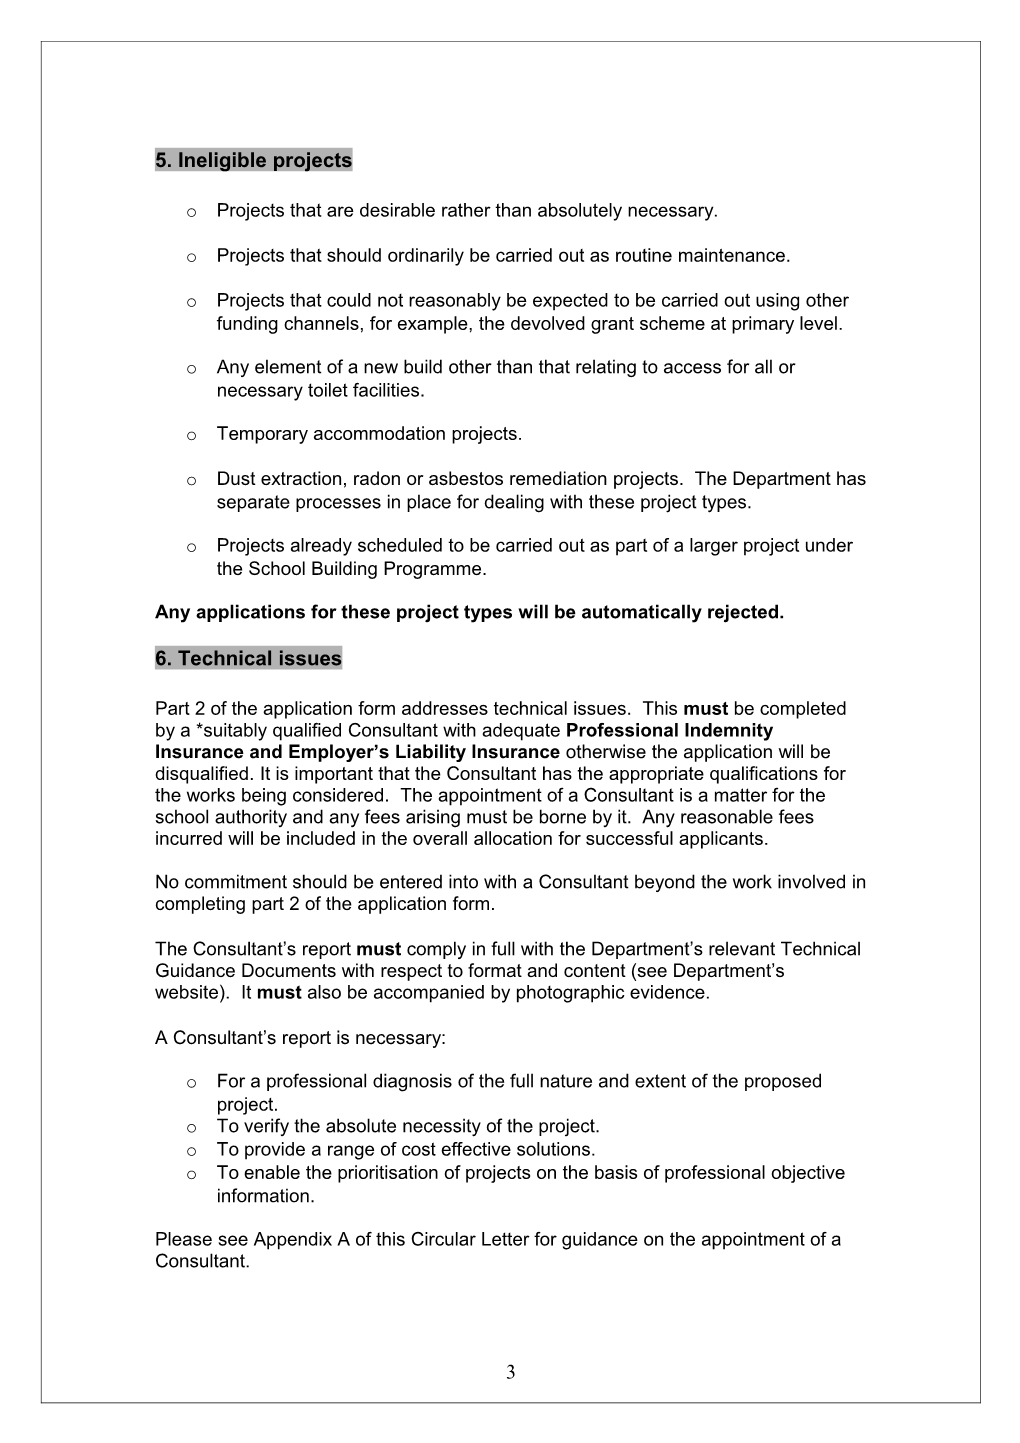 Circular PBU03/05 - Summer Works Scheme 2006 - Scheme of Capital Grants for Small Scale